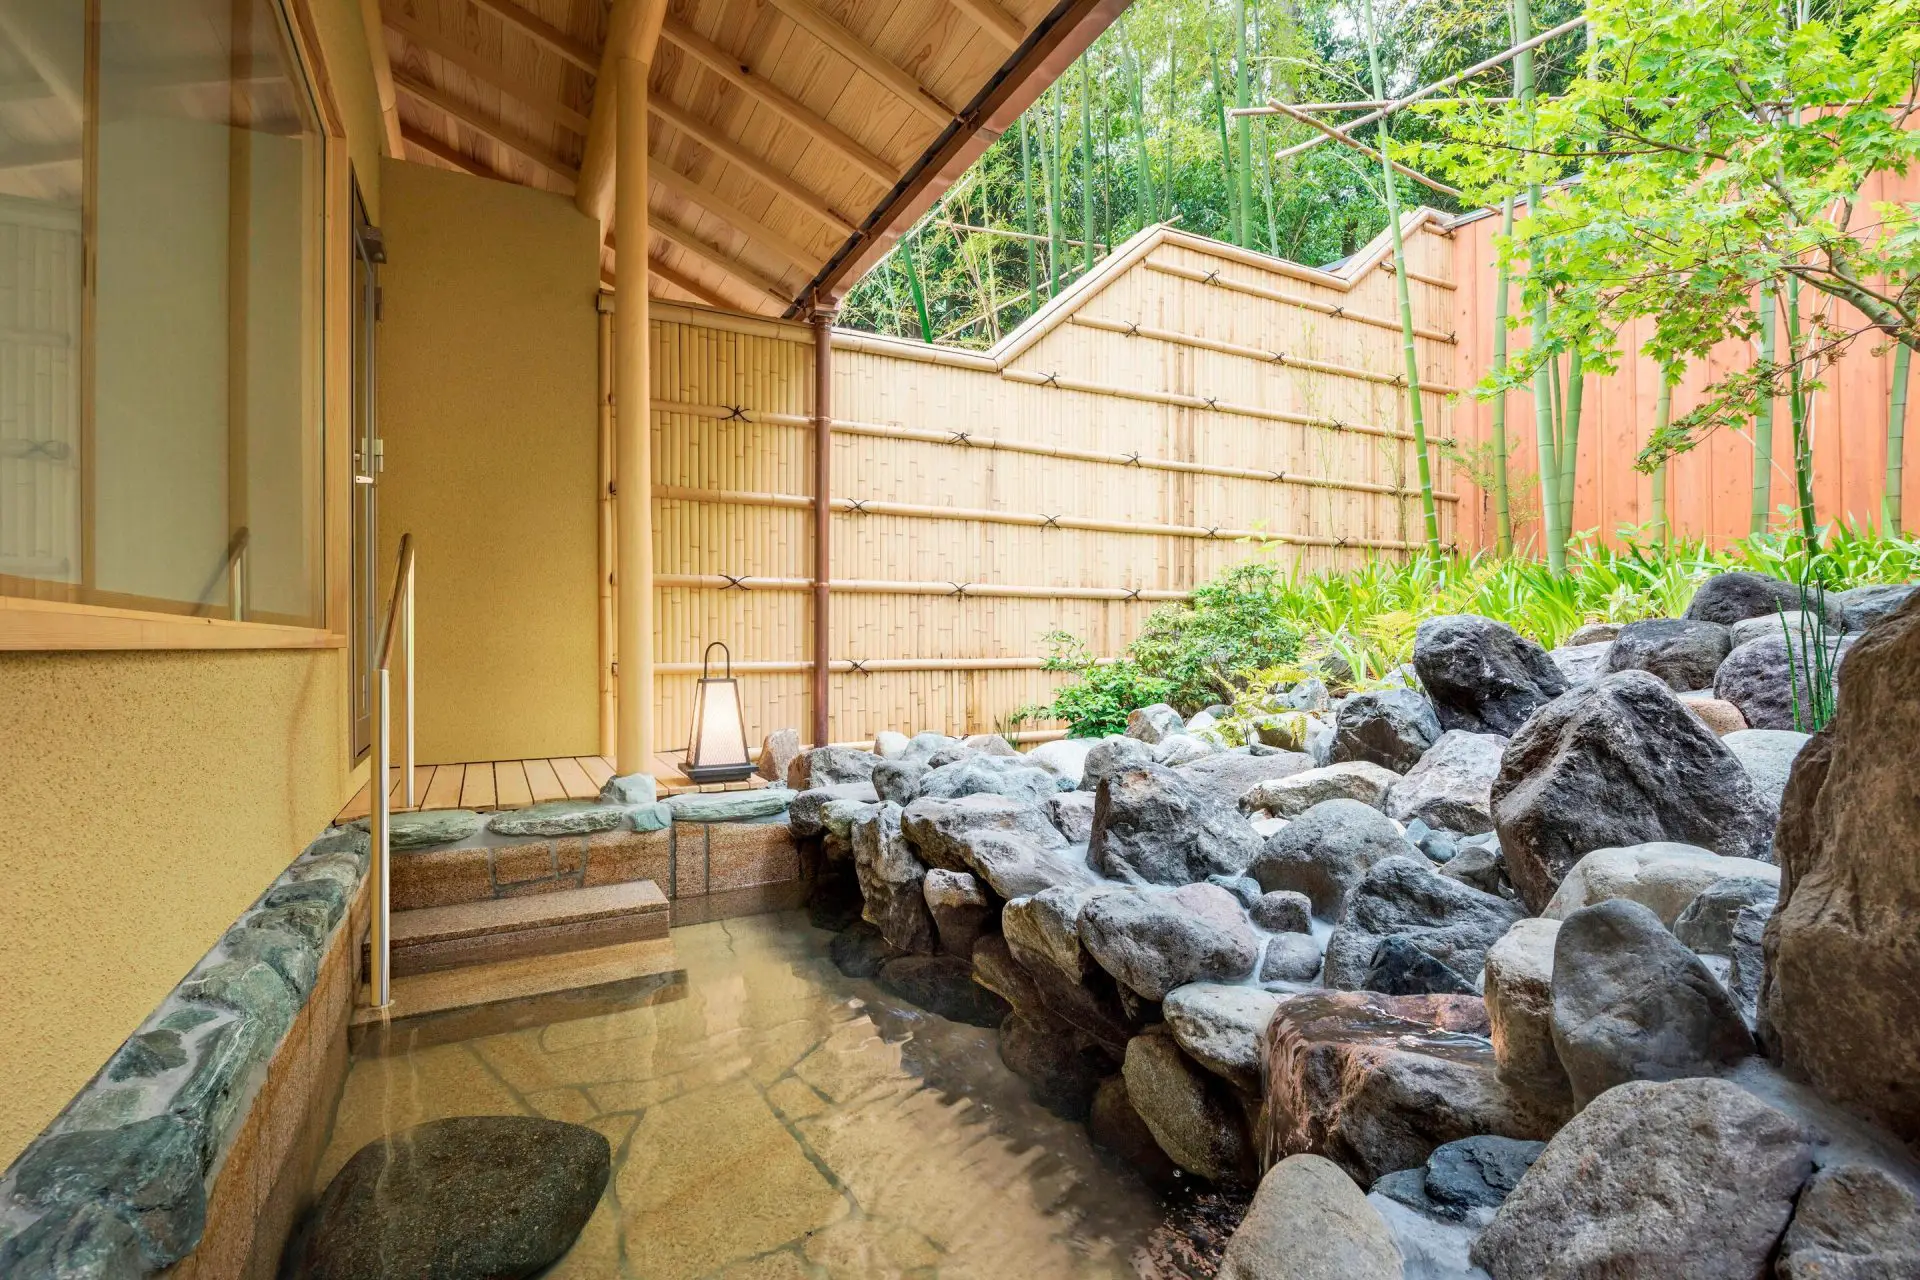 Private spa at Suiran / Image via Agoda